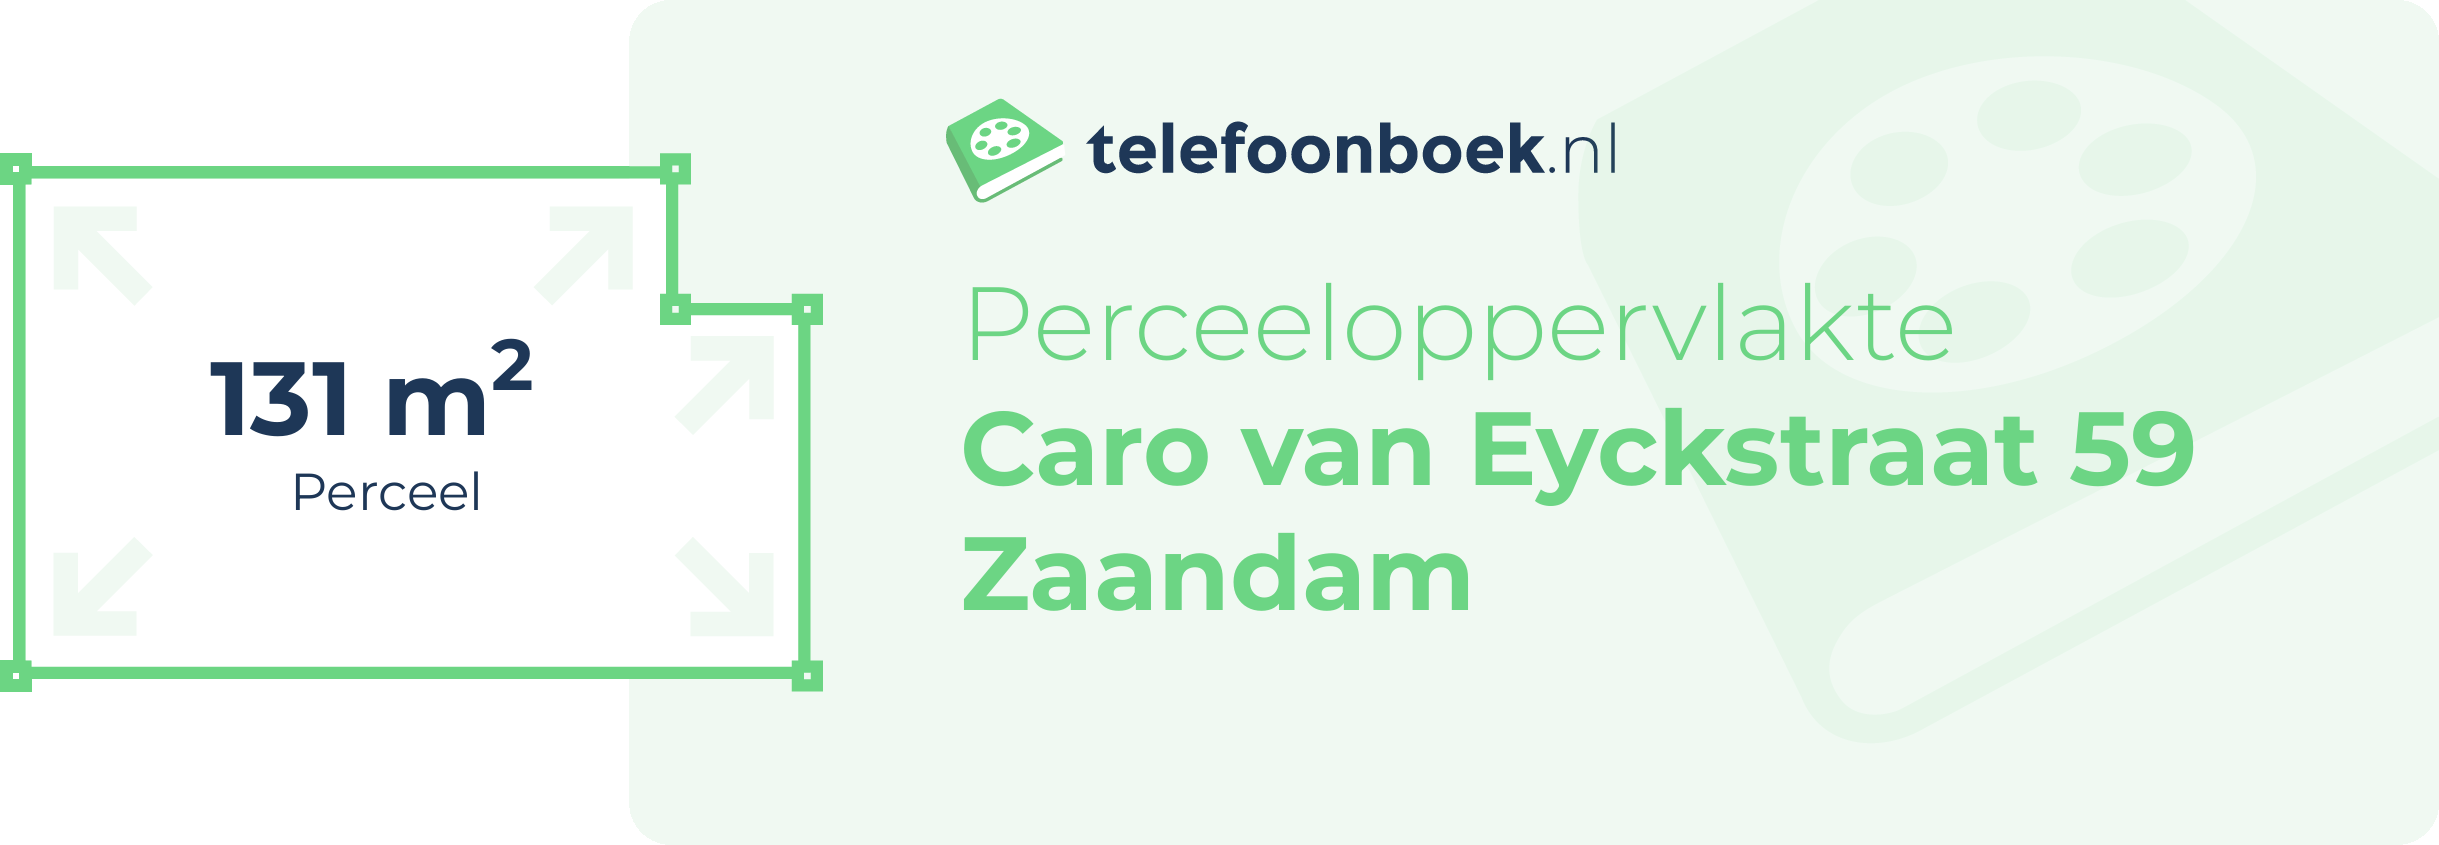 Perceeloppervlakte Caro Van Eyckstraat 59 Zaandam